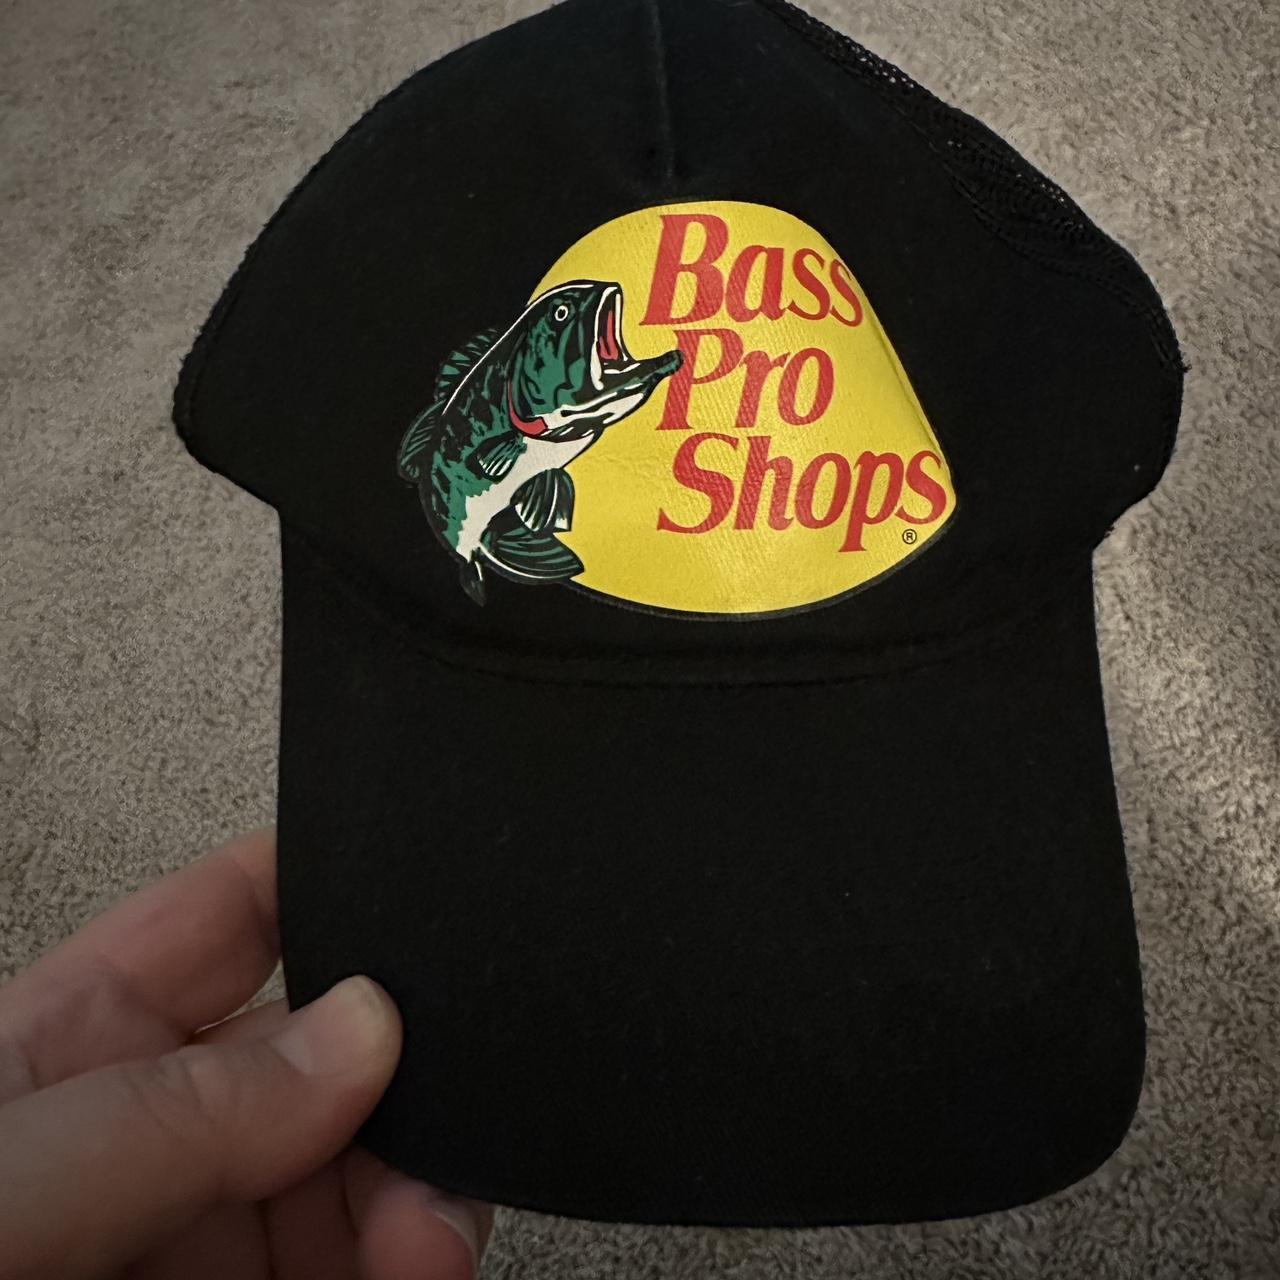 Bass Pro Shops Men's Caps - Black